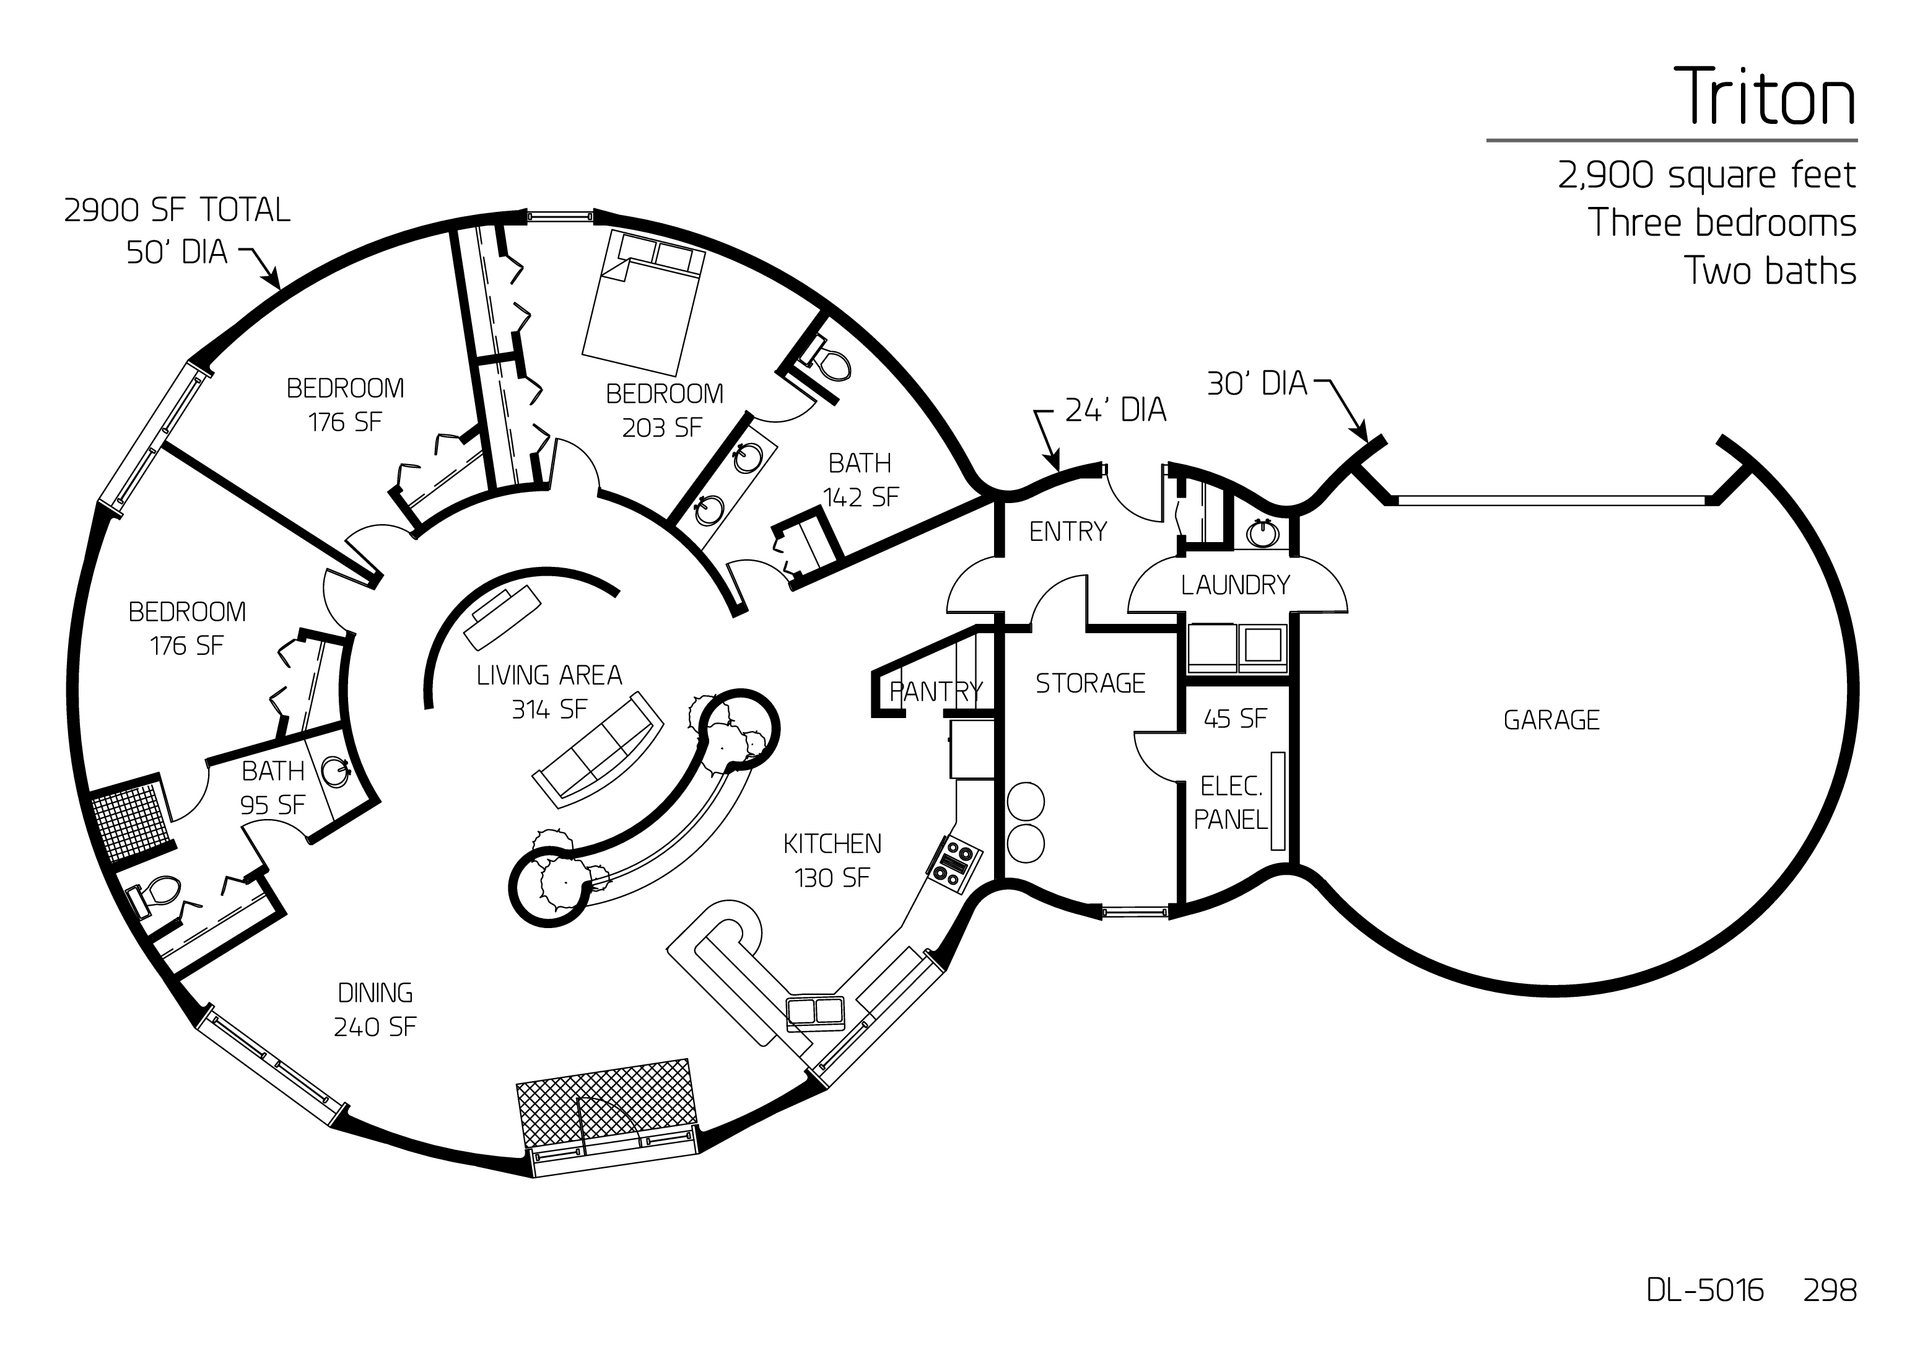 Triton: A 30', 24' and 50' Diameter Dome, Three-Bedroom, Two Bath, Garage Floor Plan.